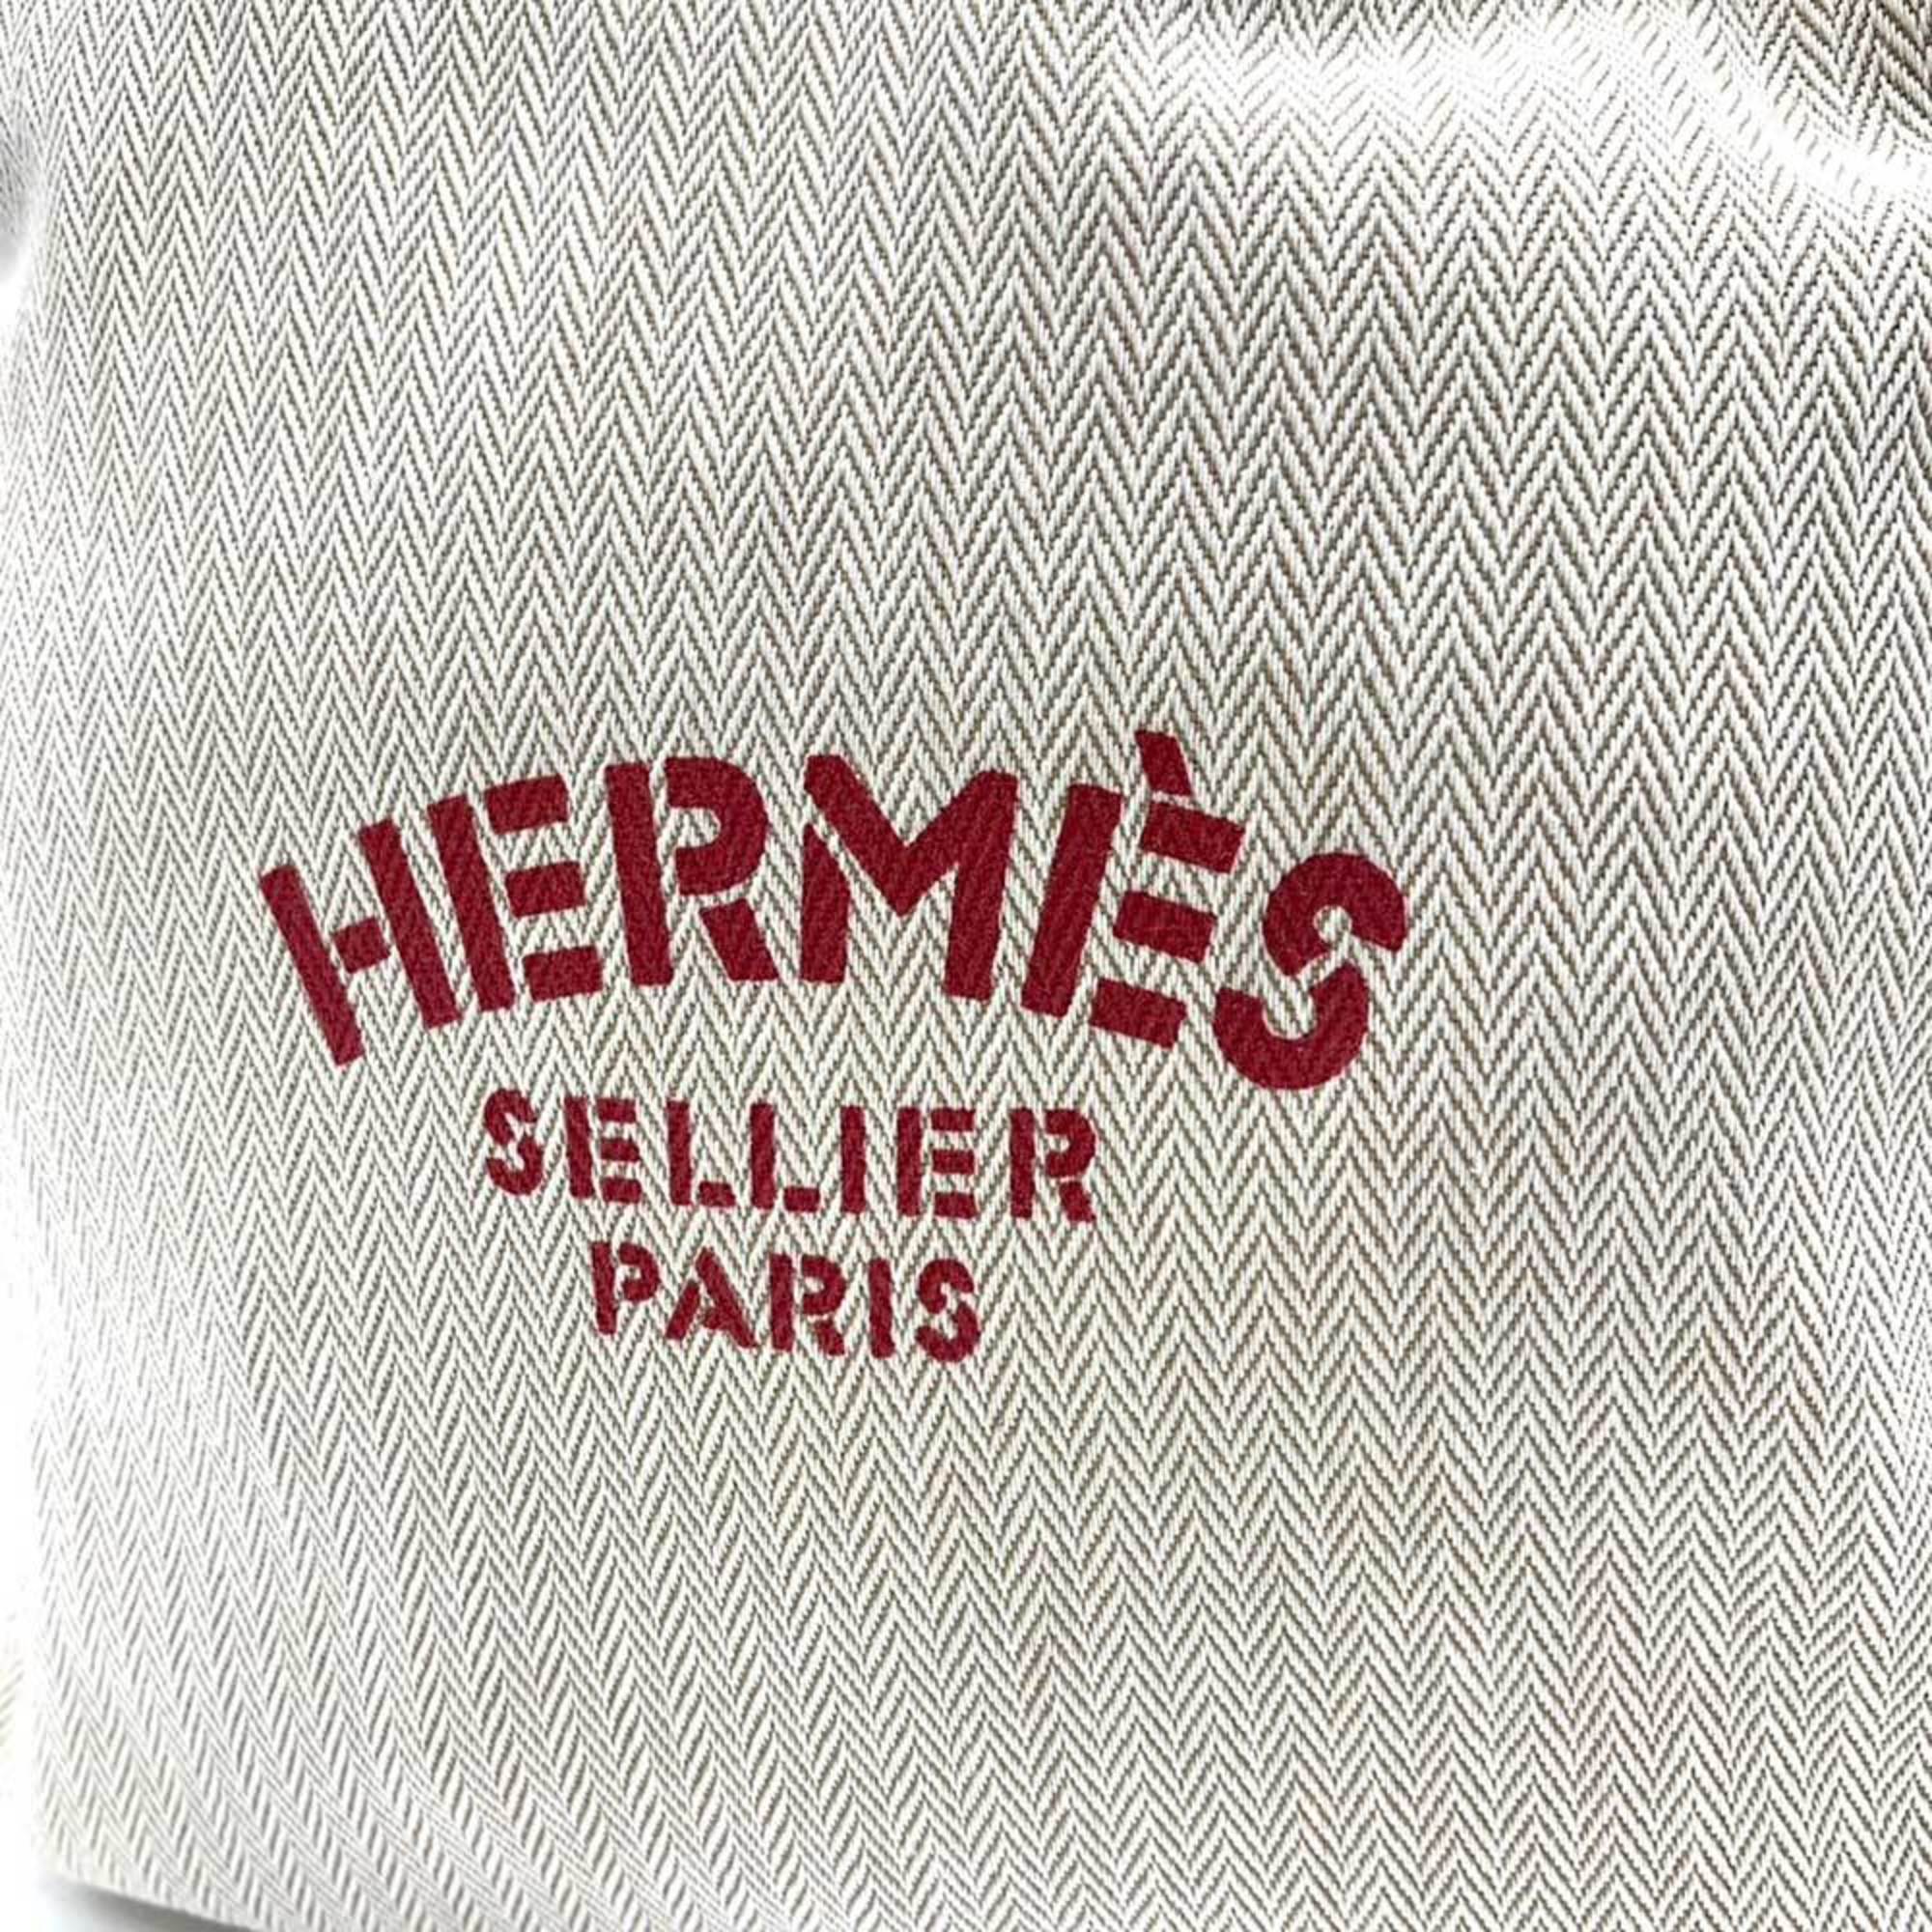 Hermes Bag Aline PM Natural Beige x Red Shoulder Flat Square Ladies Men's Cotton Canvas Leather HERMES